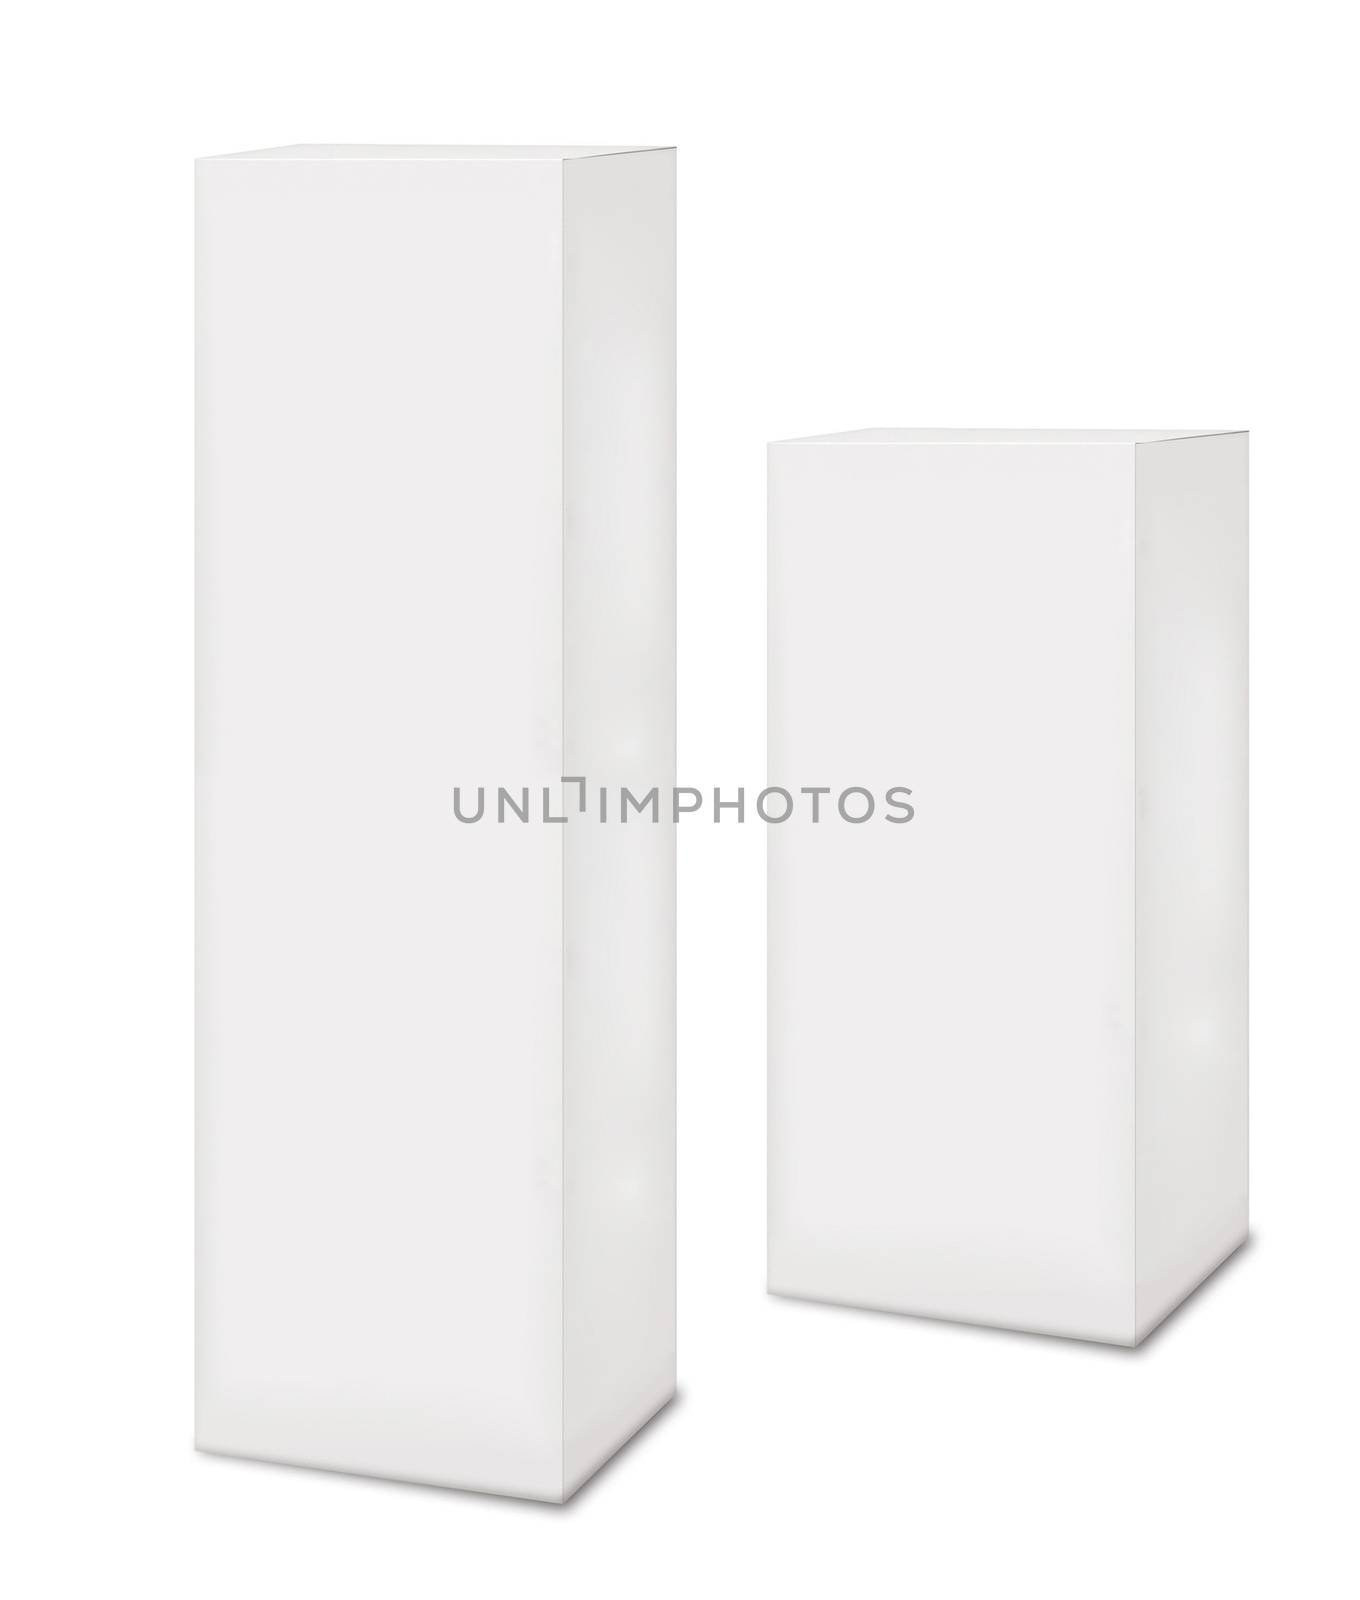 white boxes by ozaiachin